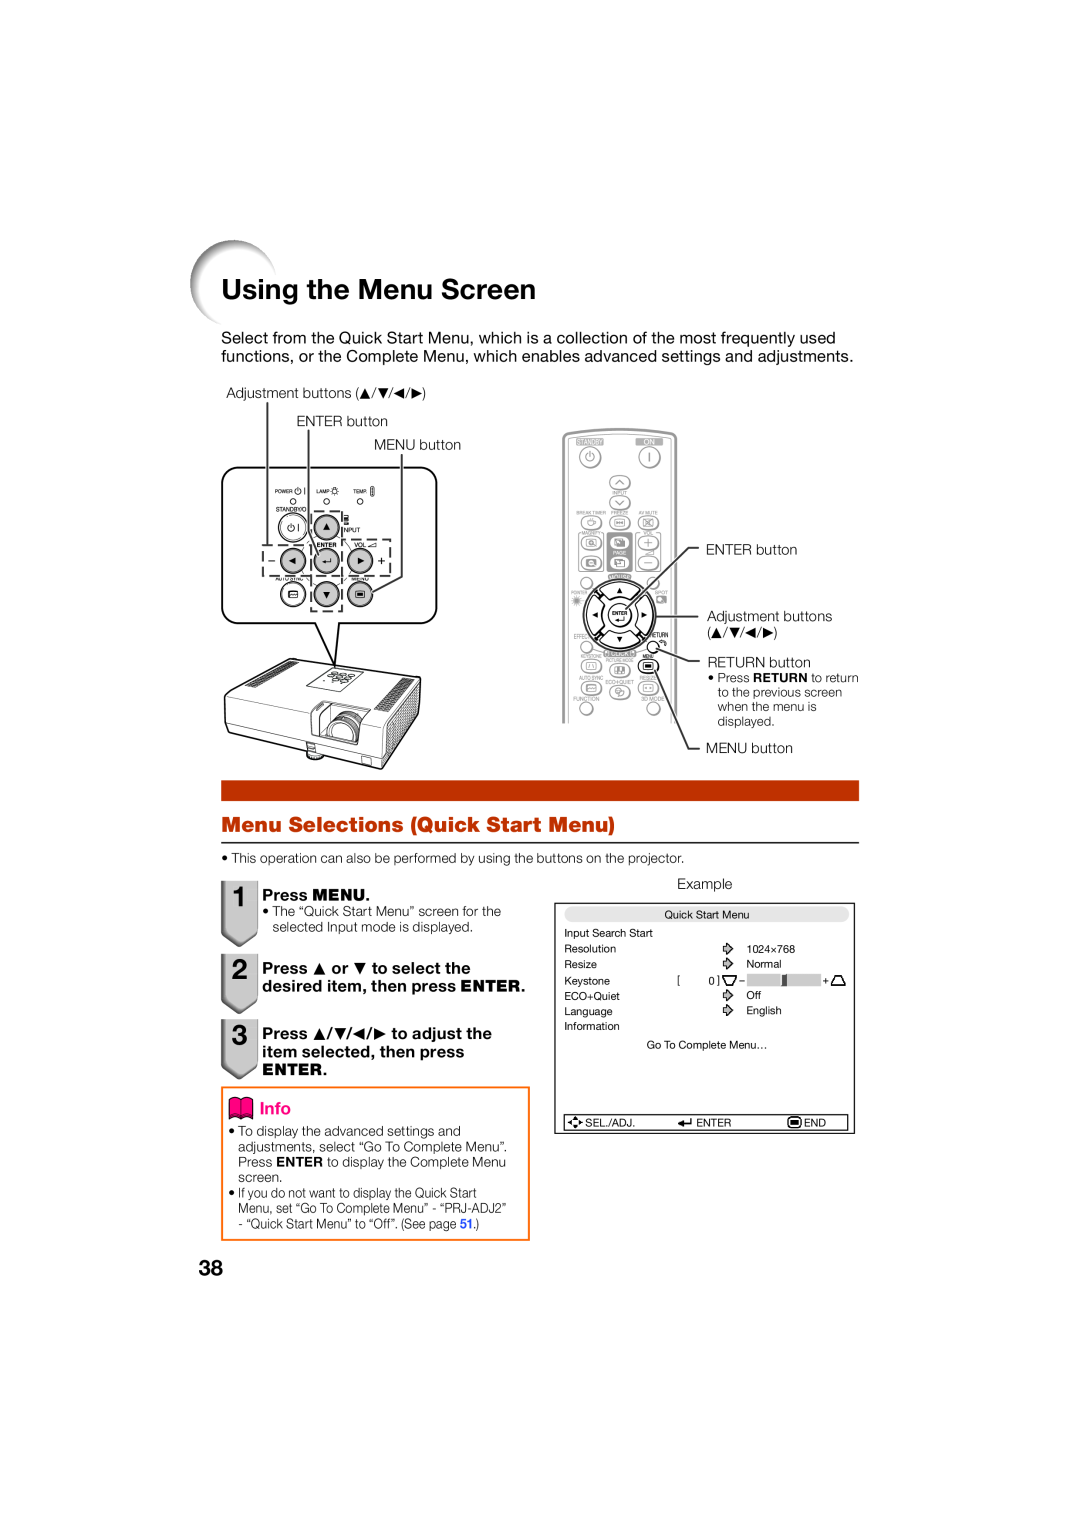 Sharp XR-55X, XR-50S appendix Using the Menu Screen, Menu Selections Quick Start Menu, Press MENU, Info 